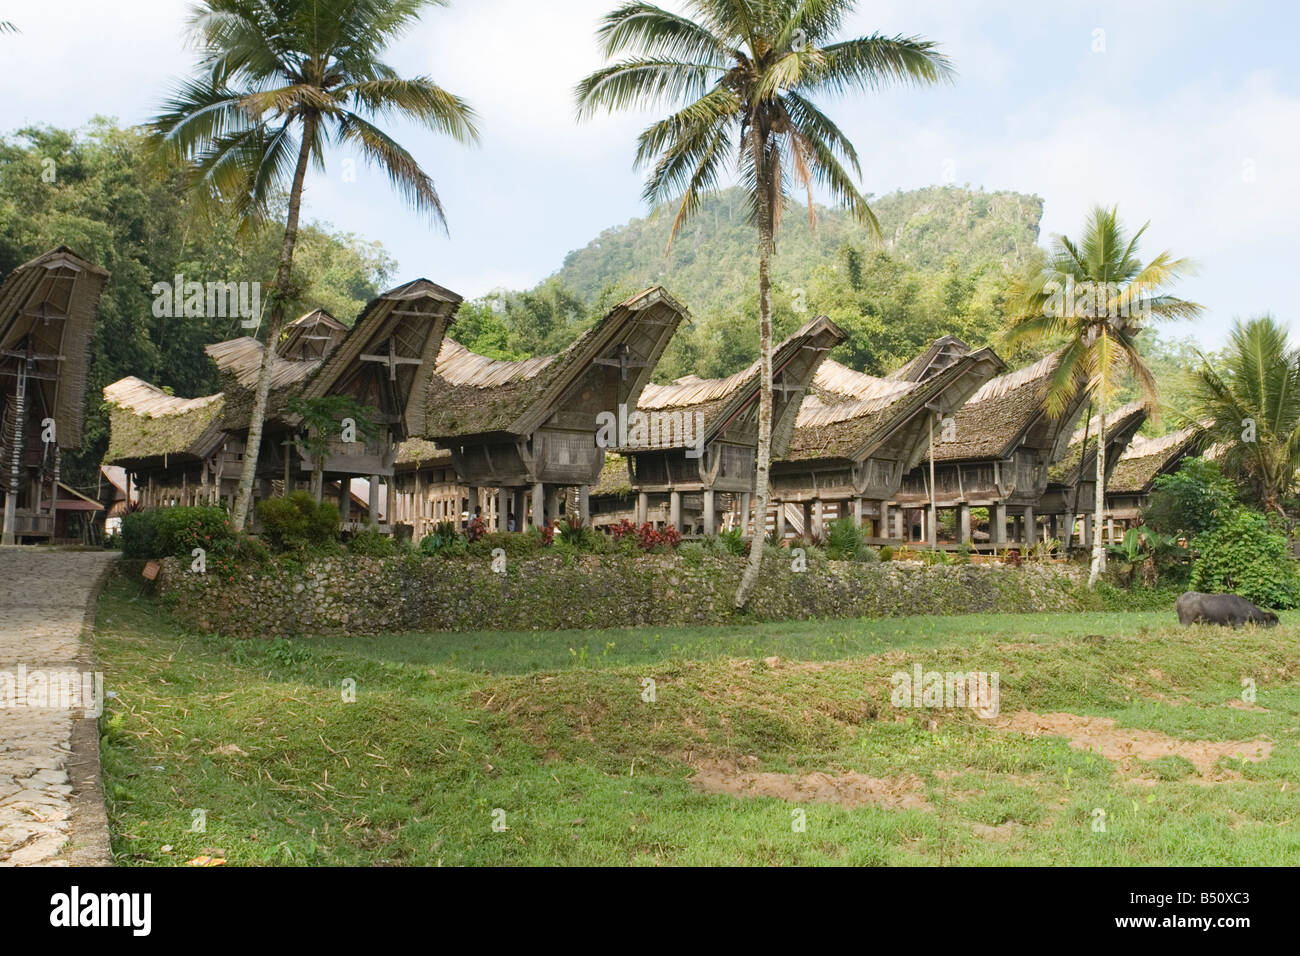 Häuser und Reis Scheunen des Dorfes Ke'te Kesu (Sulawesi - Indonesien). Maisons et Greniers À Riz du zahlt Toraja (Indonésie). Stockfoto